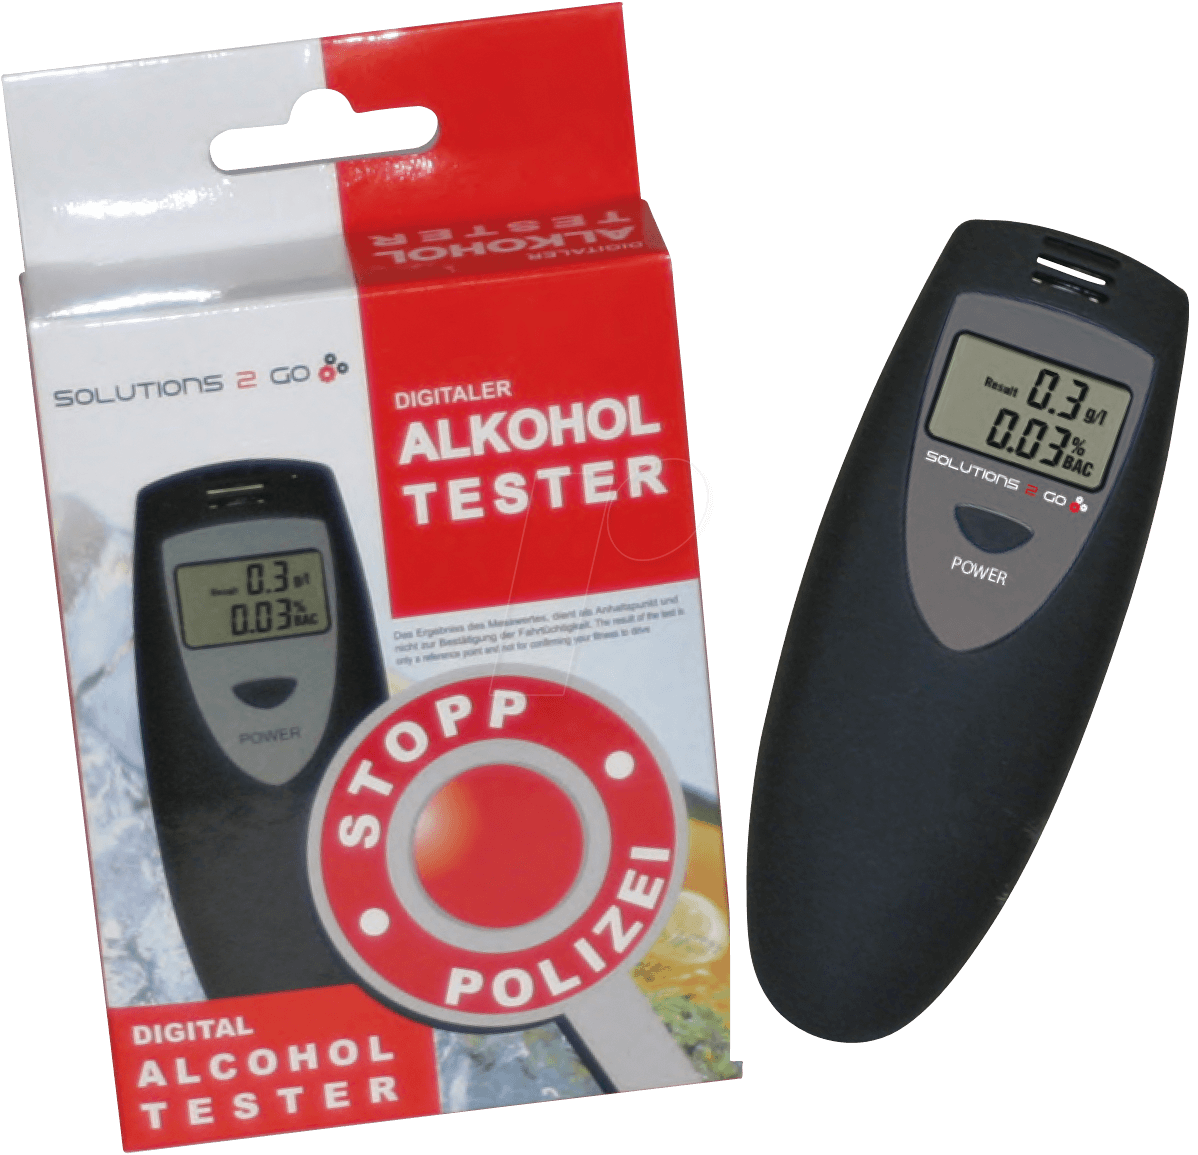 Alcohol breath tester